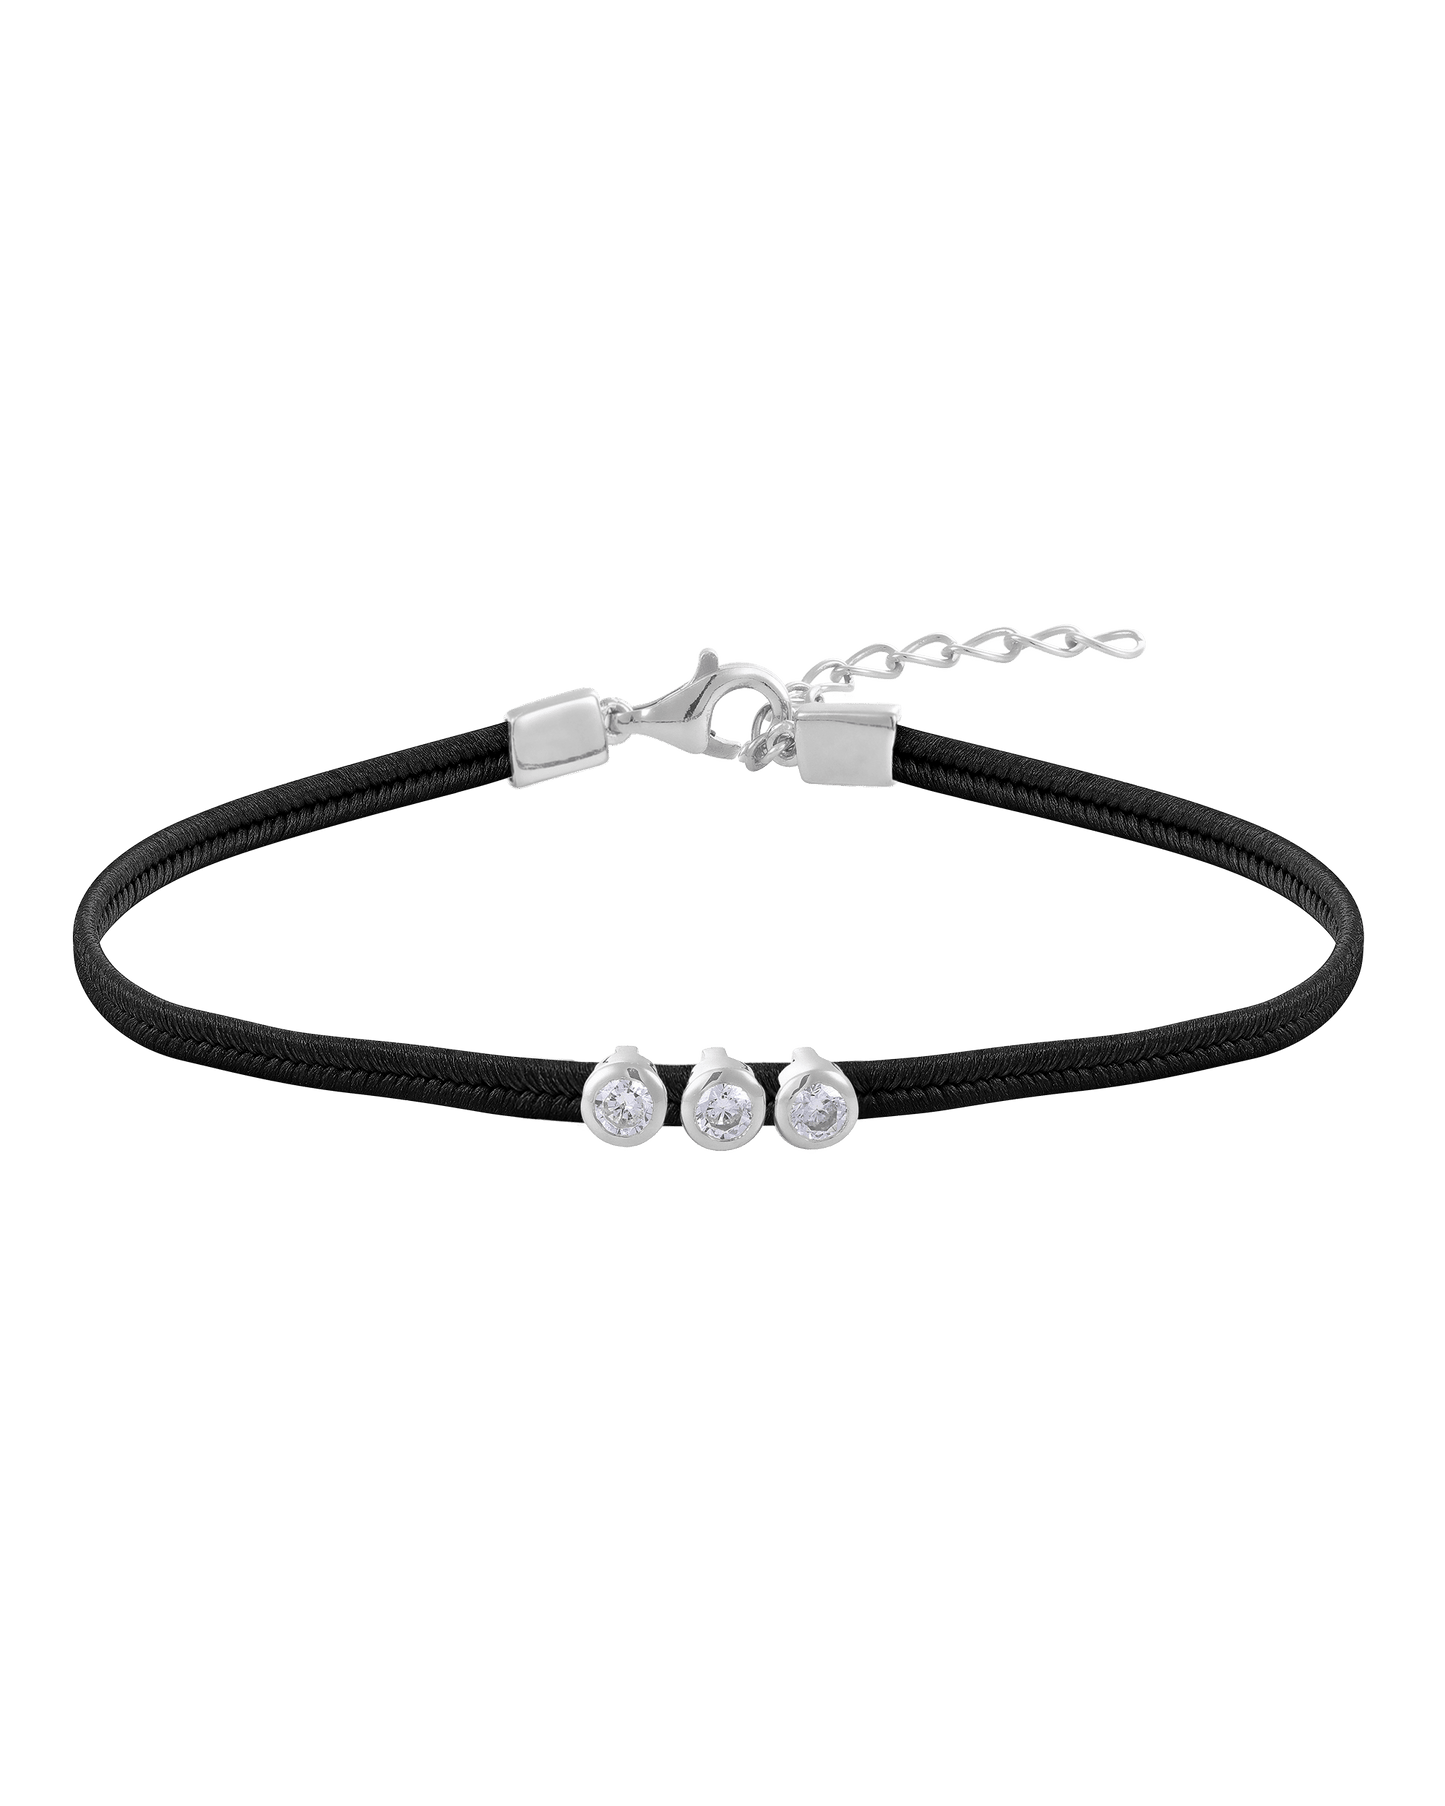 The Cord of Love - 925 Sterling Silver Bracelets magal-dev 1 Diamond Black 